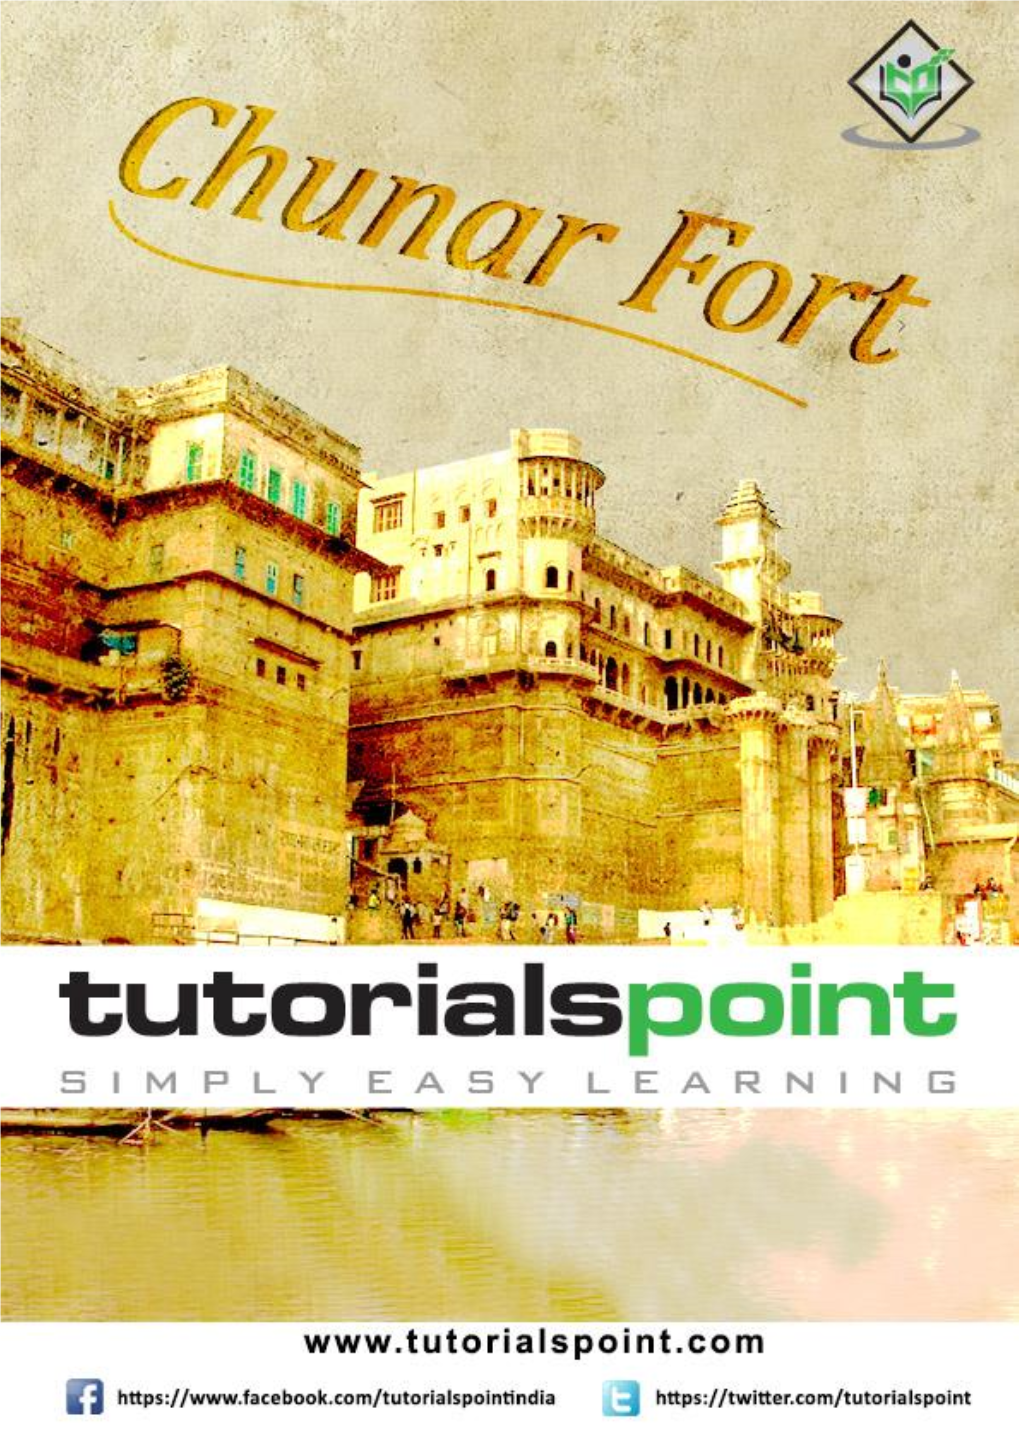 Download Chunar Fort (PDF Version)